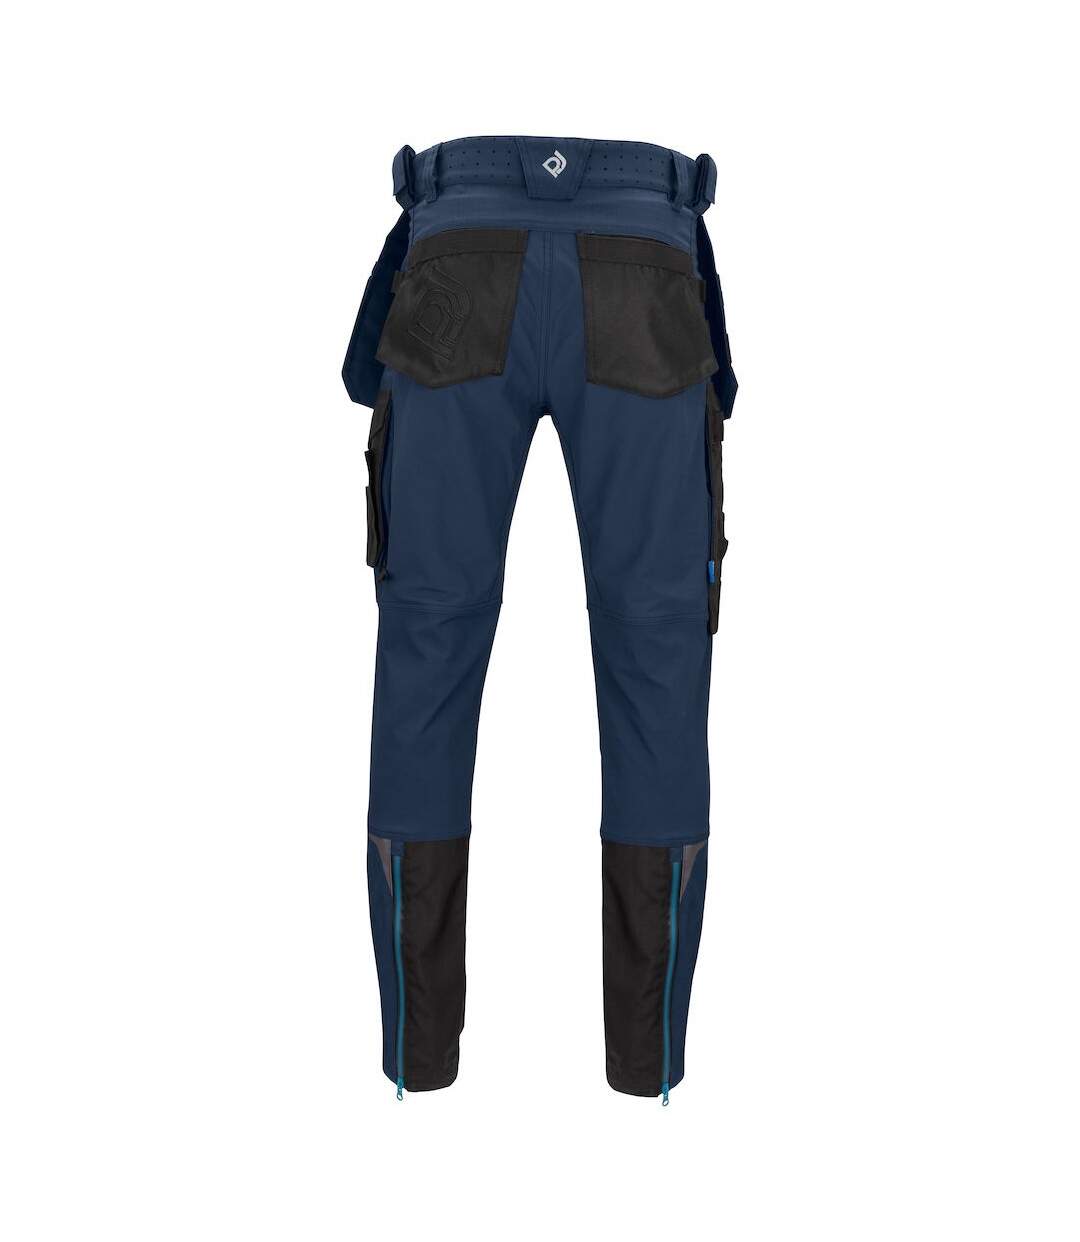 Projob - Pantalon - Homme (Bleu marine) - UTUB616